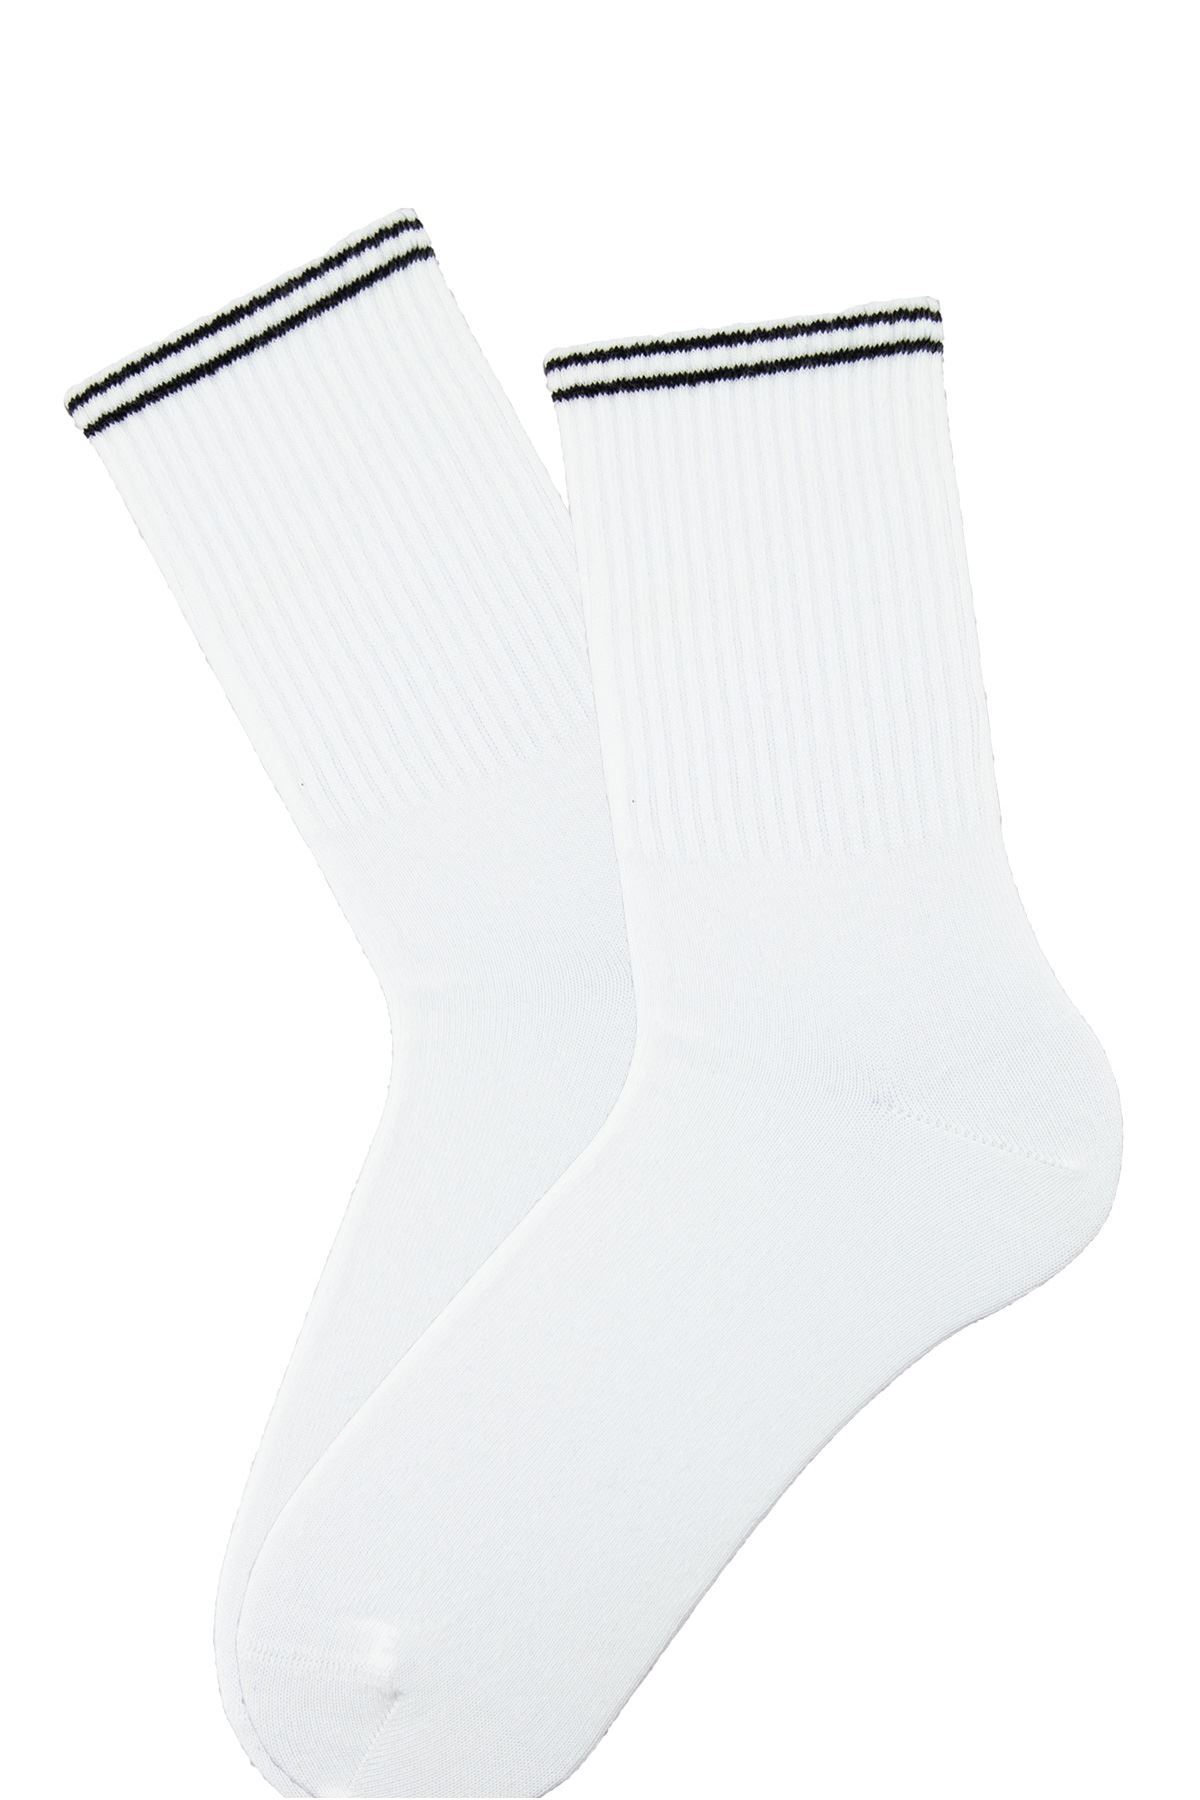 MAN SPORT LINE MID-CALF SOCKS | Buy Branded Wholesale Socks Online At ...